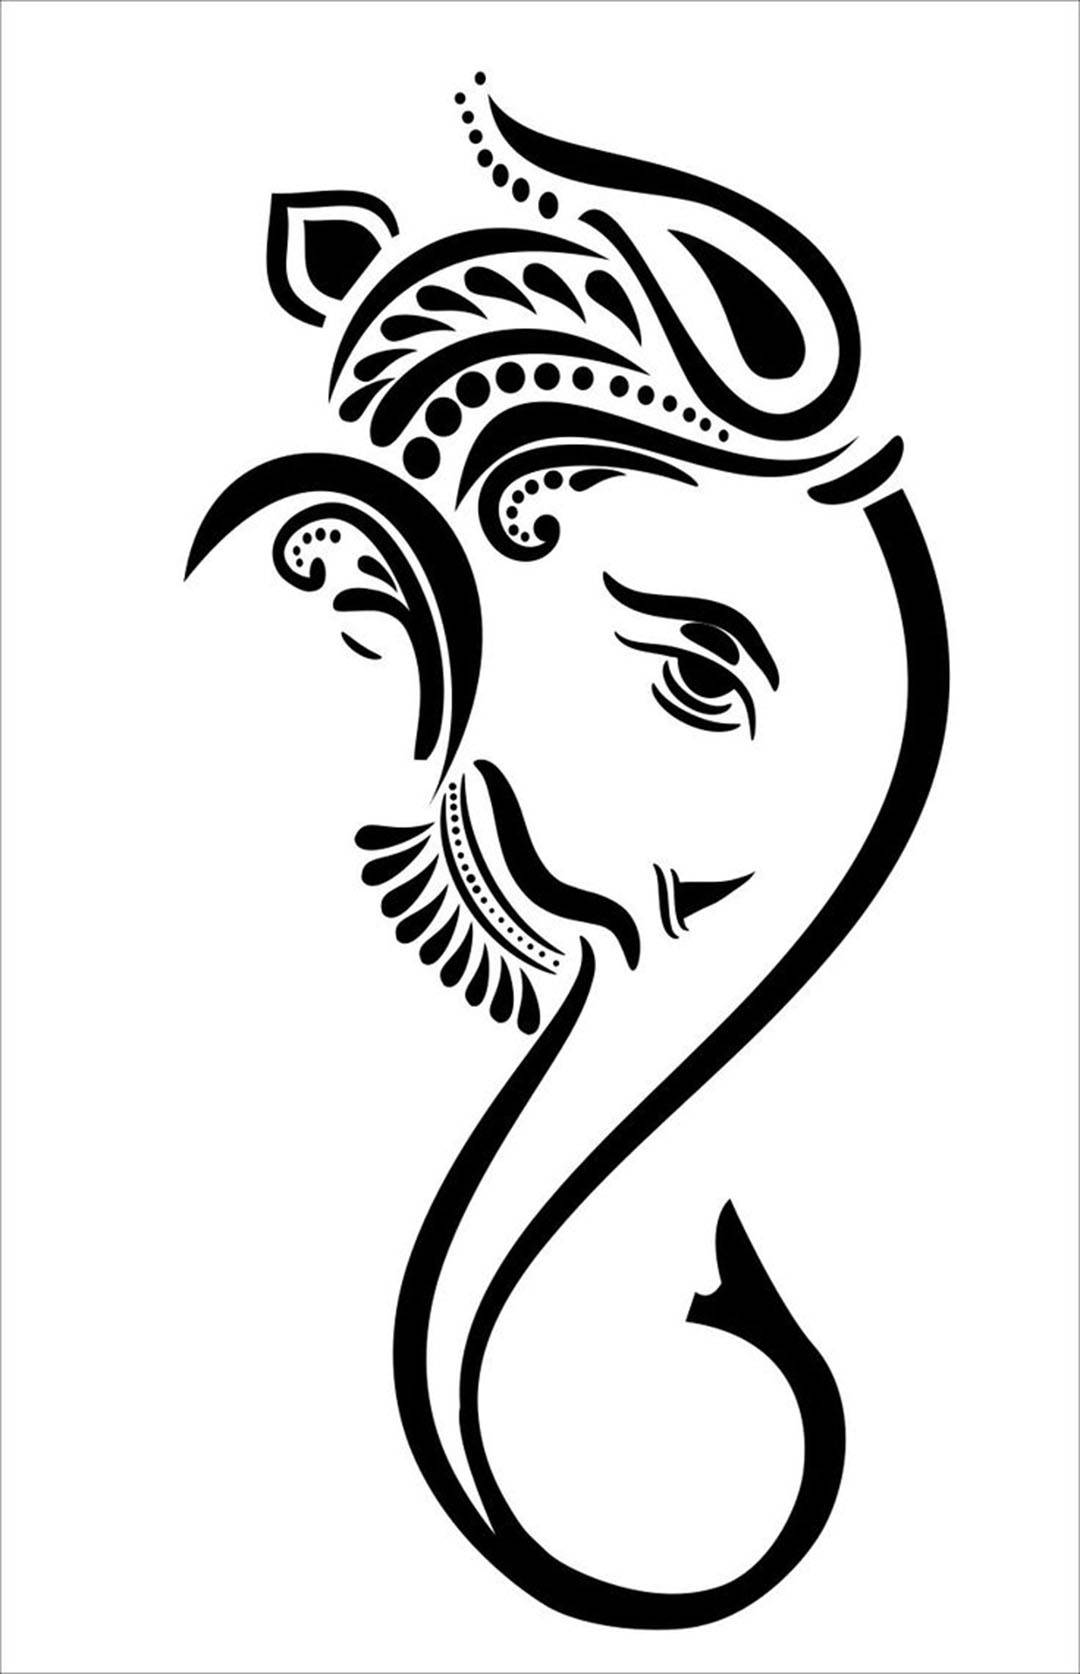 Free Ganesh Black And White Wallpaper Downloads, [100+] Ganesh Black And White  Wallpapers for FREE 